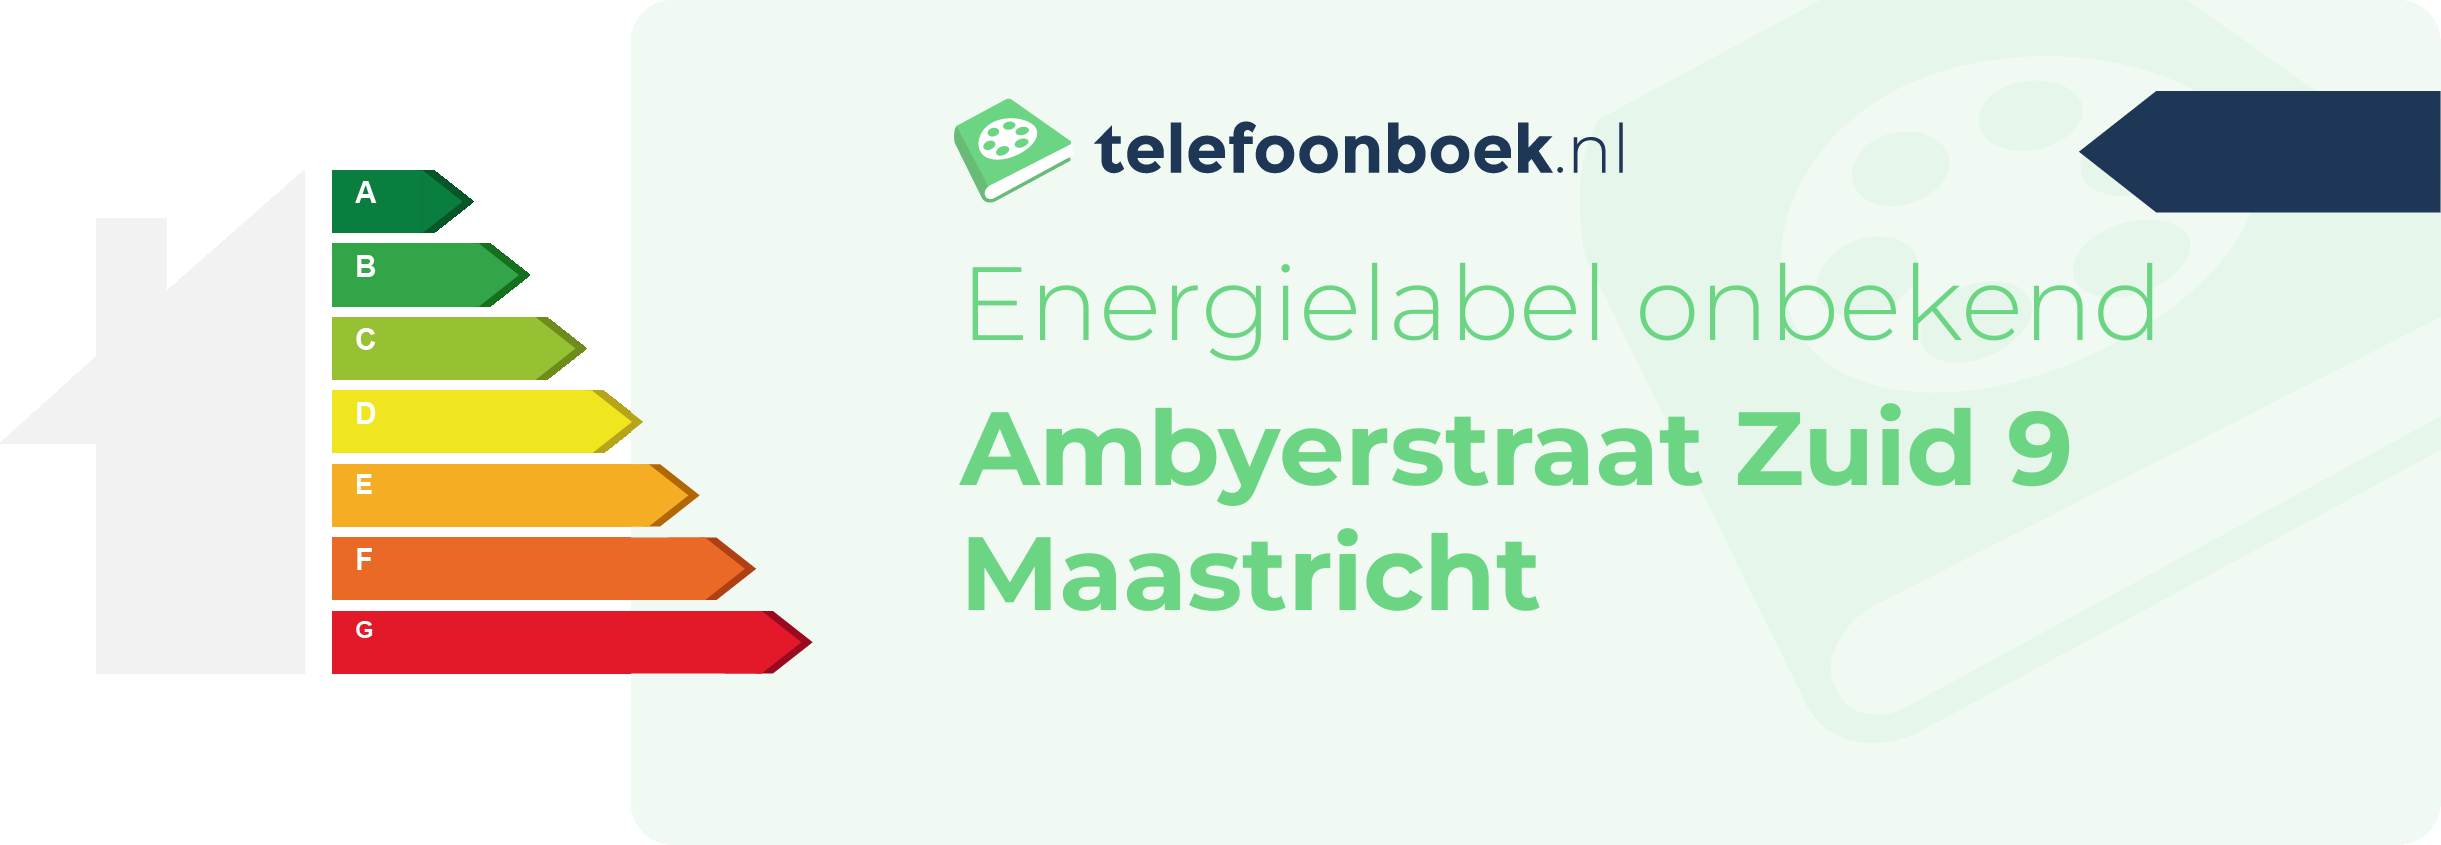 Energielabel Ambyerstraat Zuid 9 Maastricht